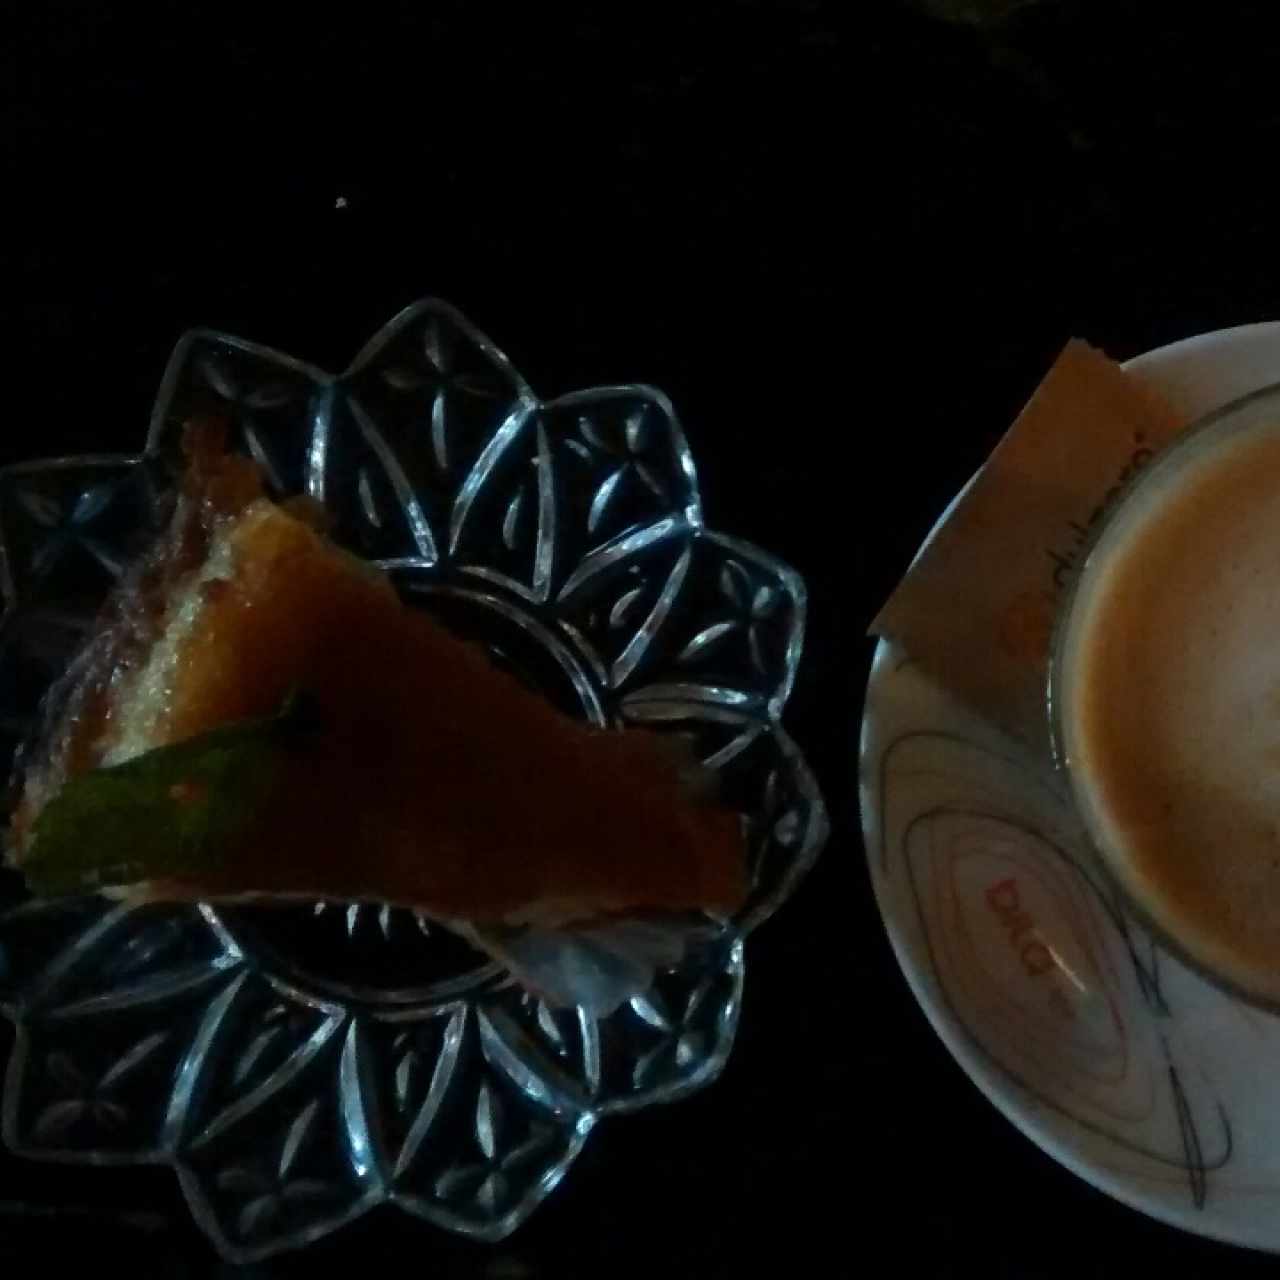 Café + Torta de queso criollo. Exquisito.